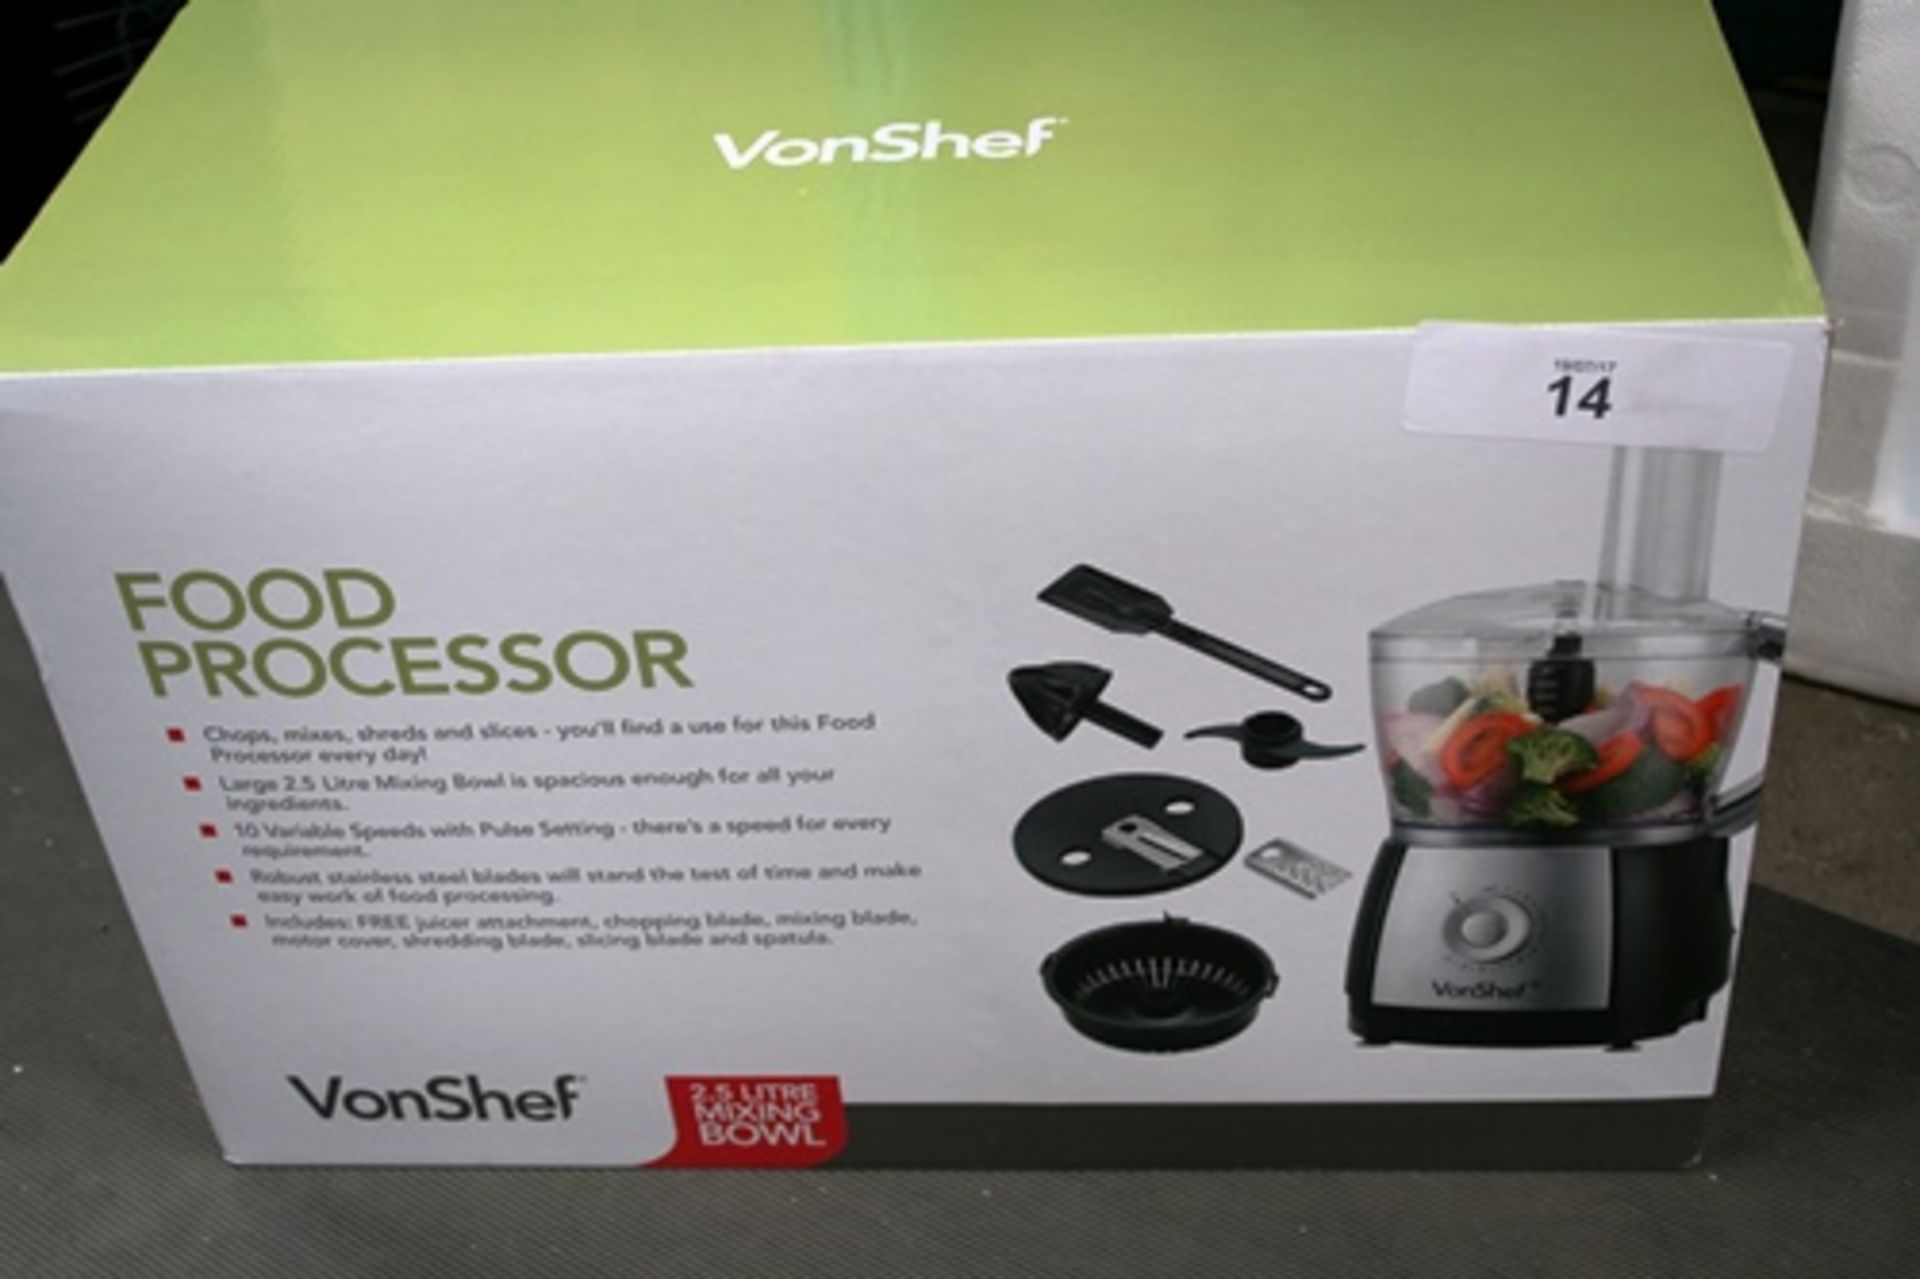 VonShef food processor, SKU: 13/110, 700W, 240V, 2.5ltr mixing bowl - New in box (ESB1)